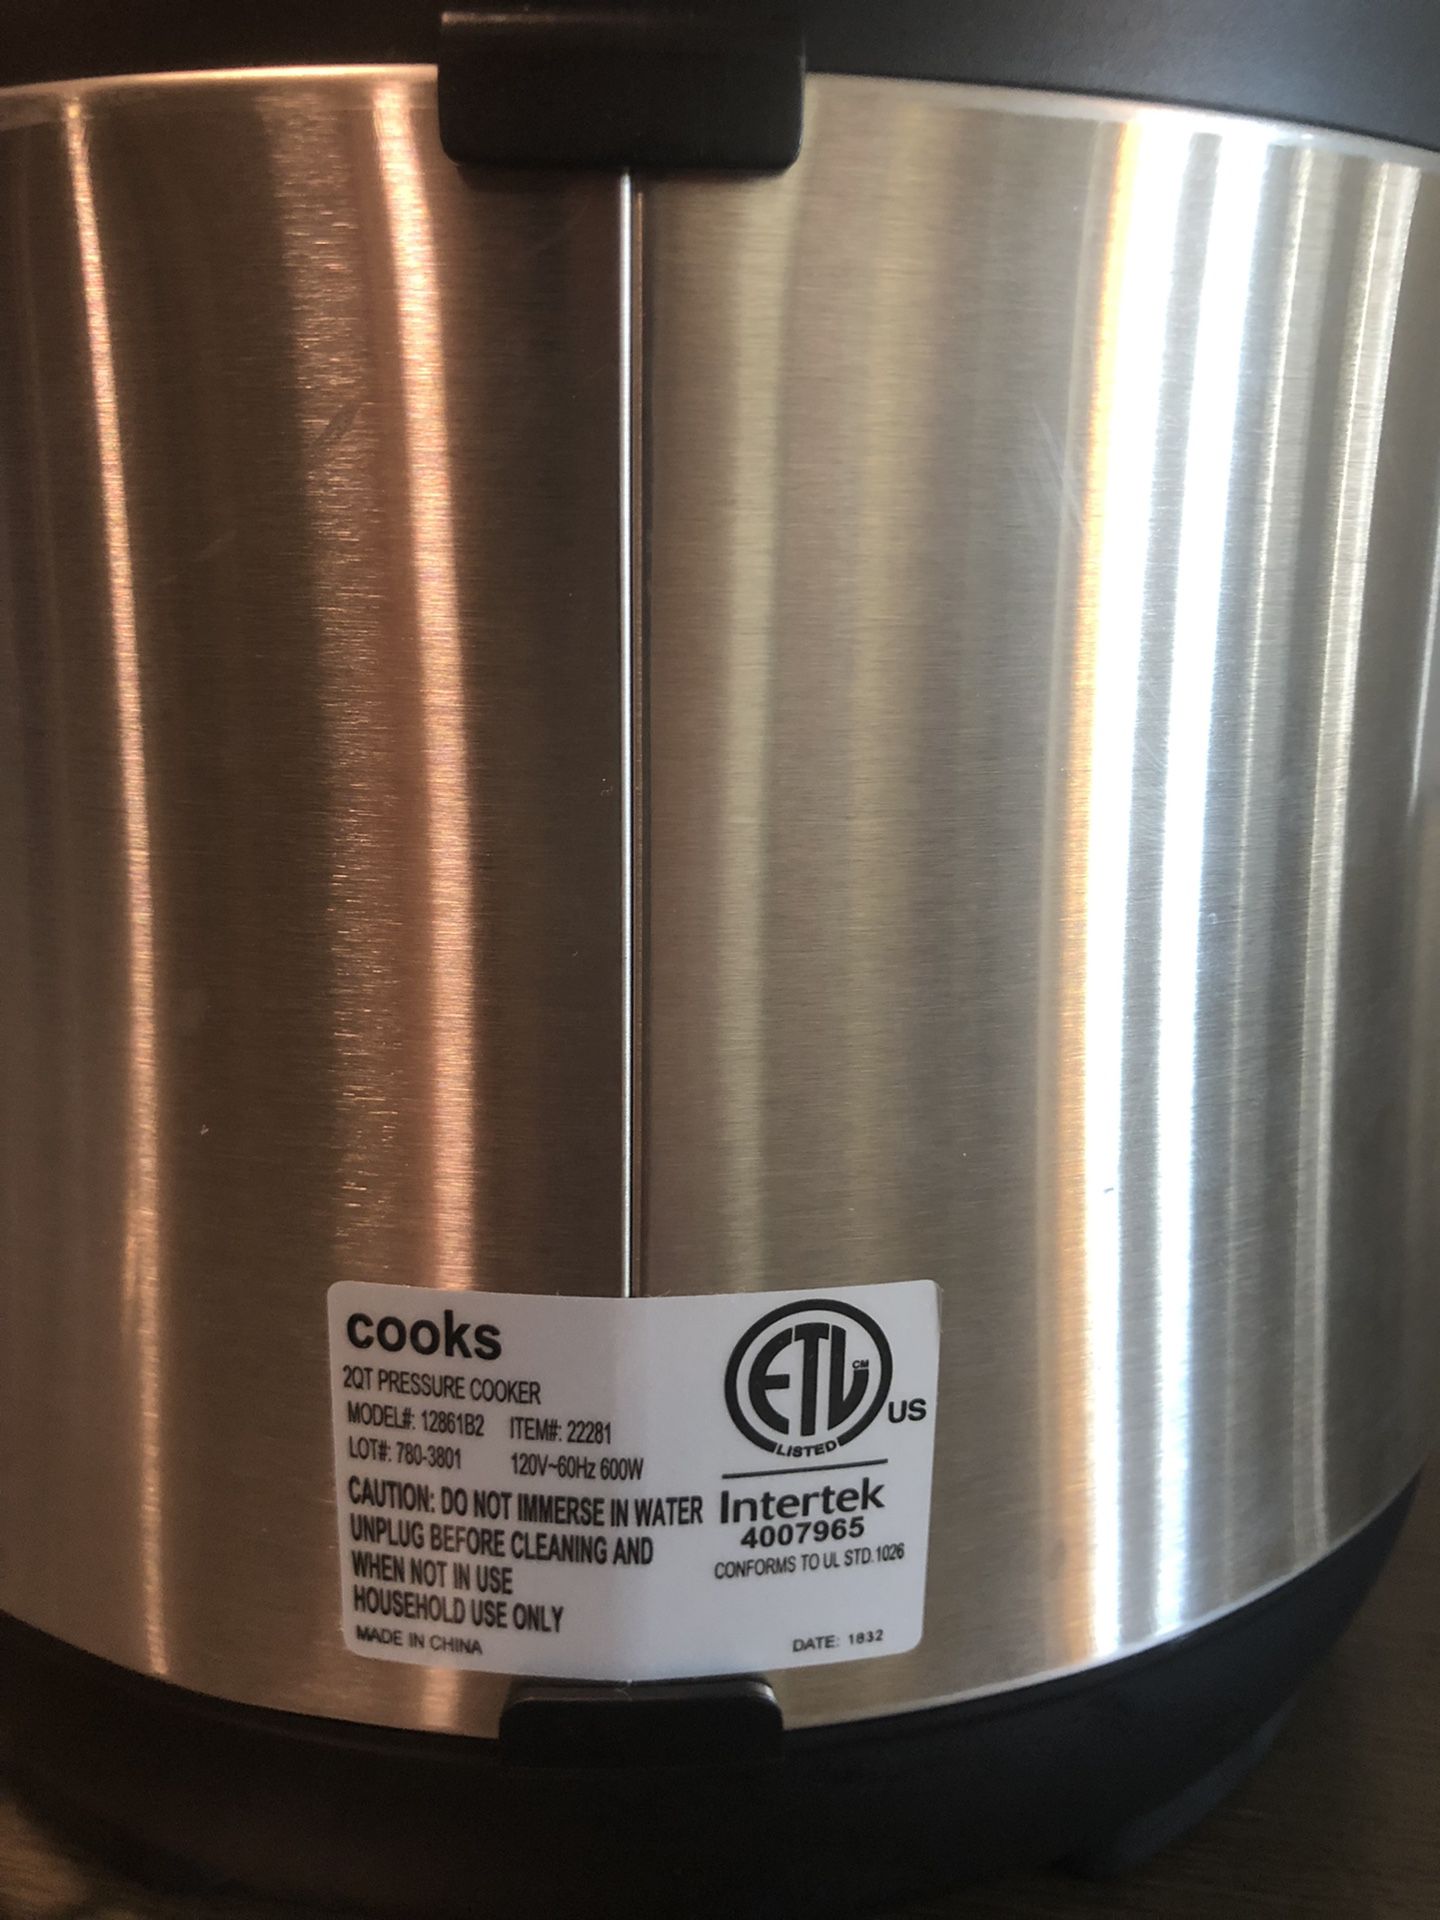 Cooks 6-QT Fast Pot Multi-Cooker $53.99 (Regularly $140!)